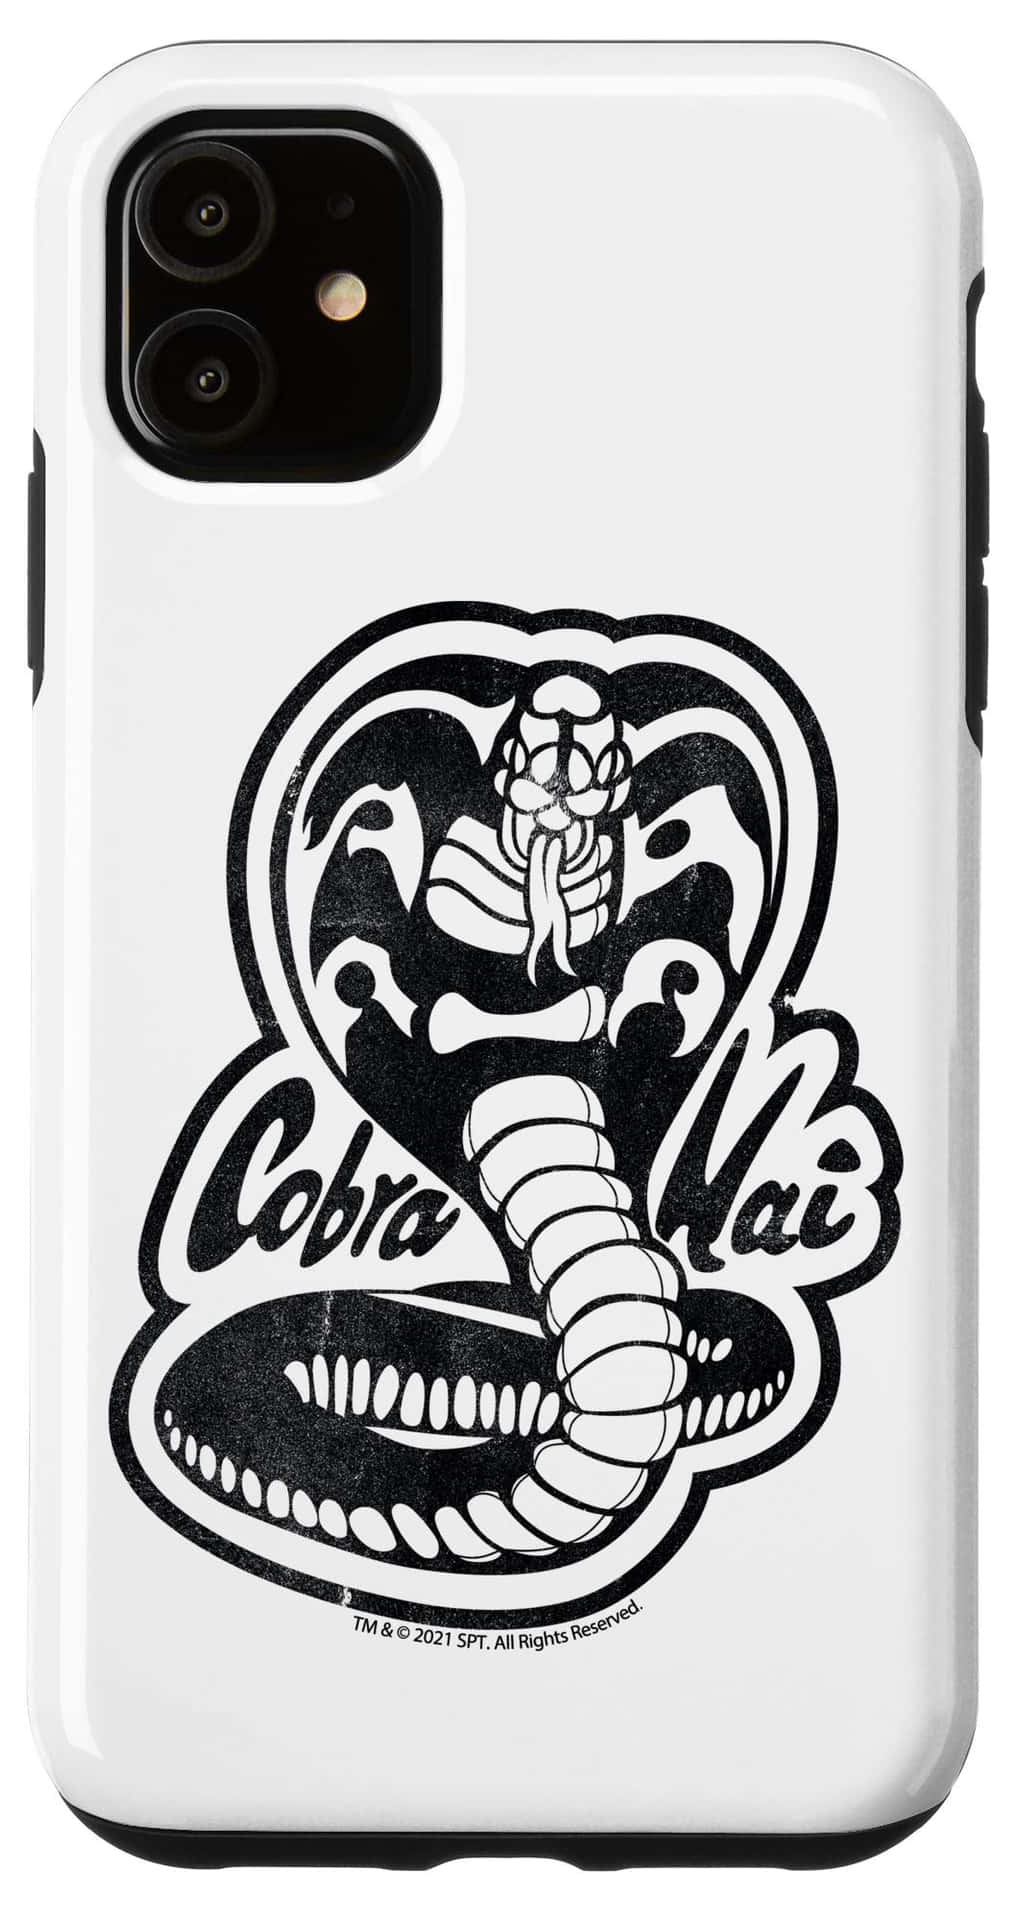 Cobra Kai Iphone Xr Black Logo Background